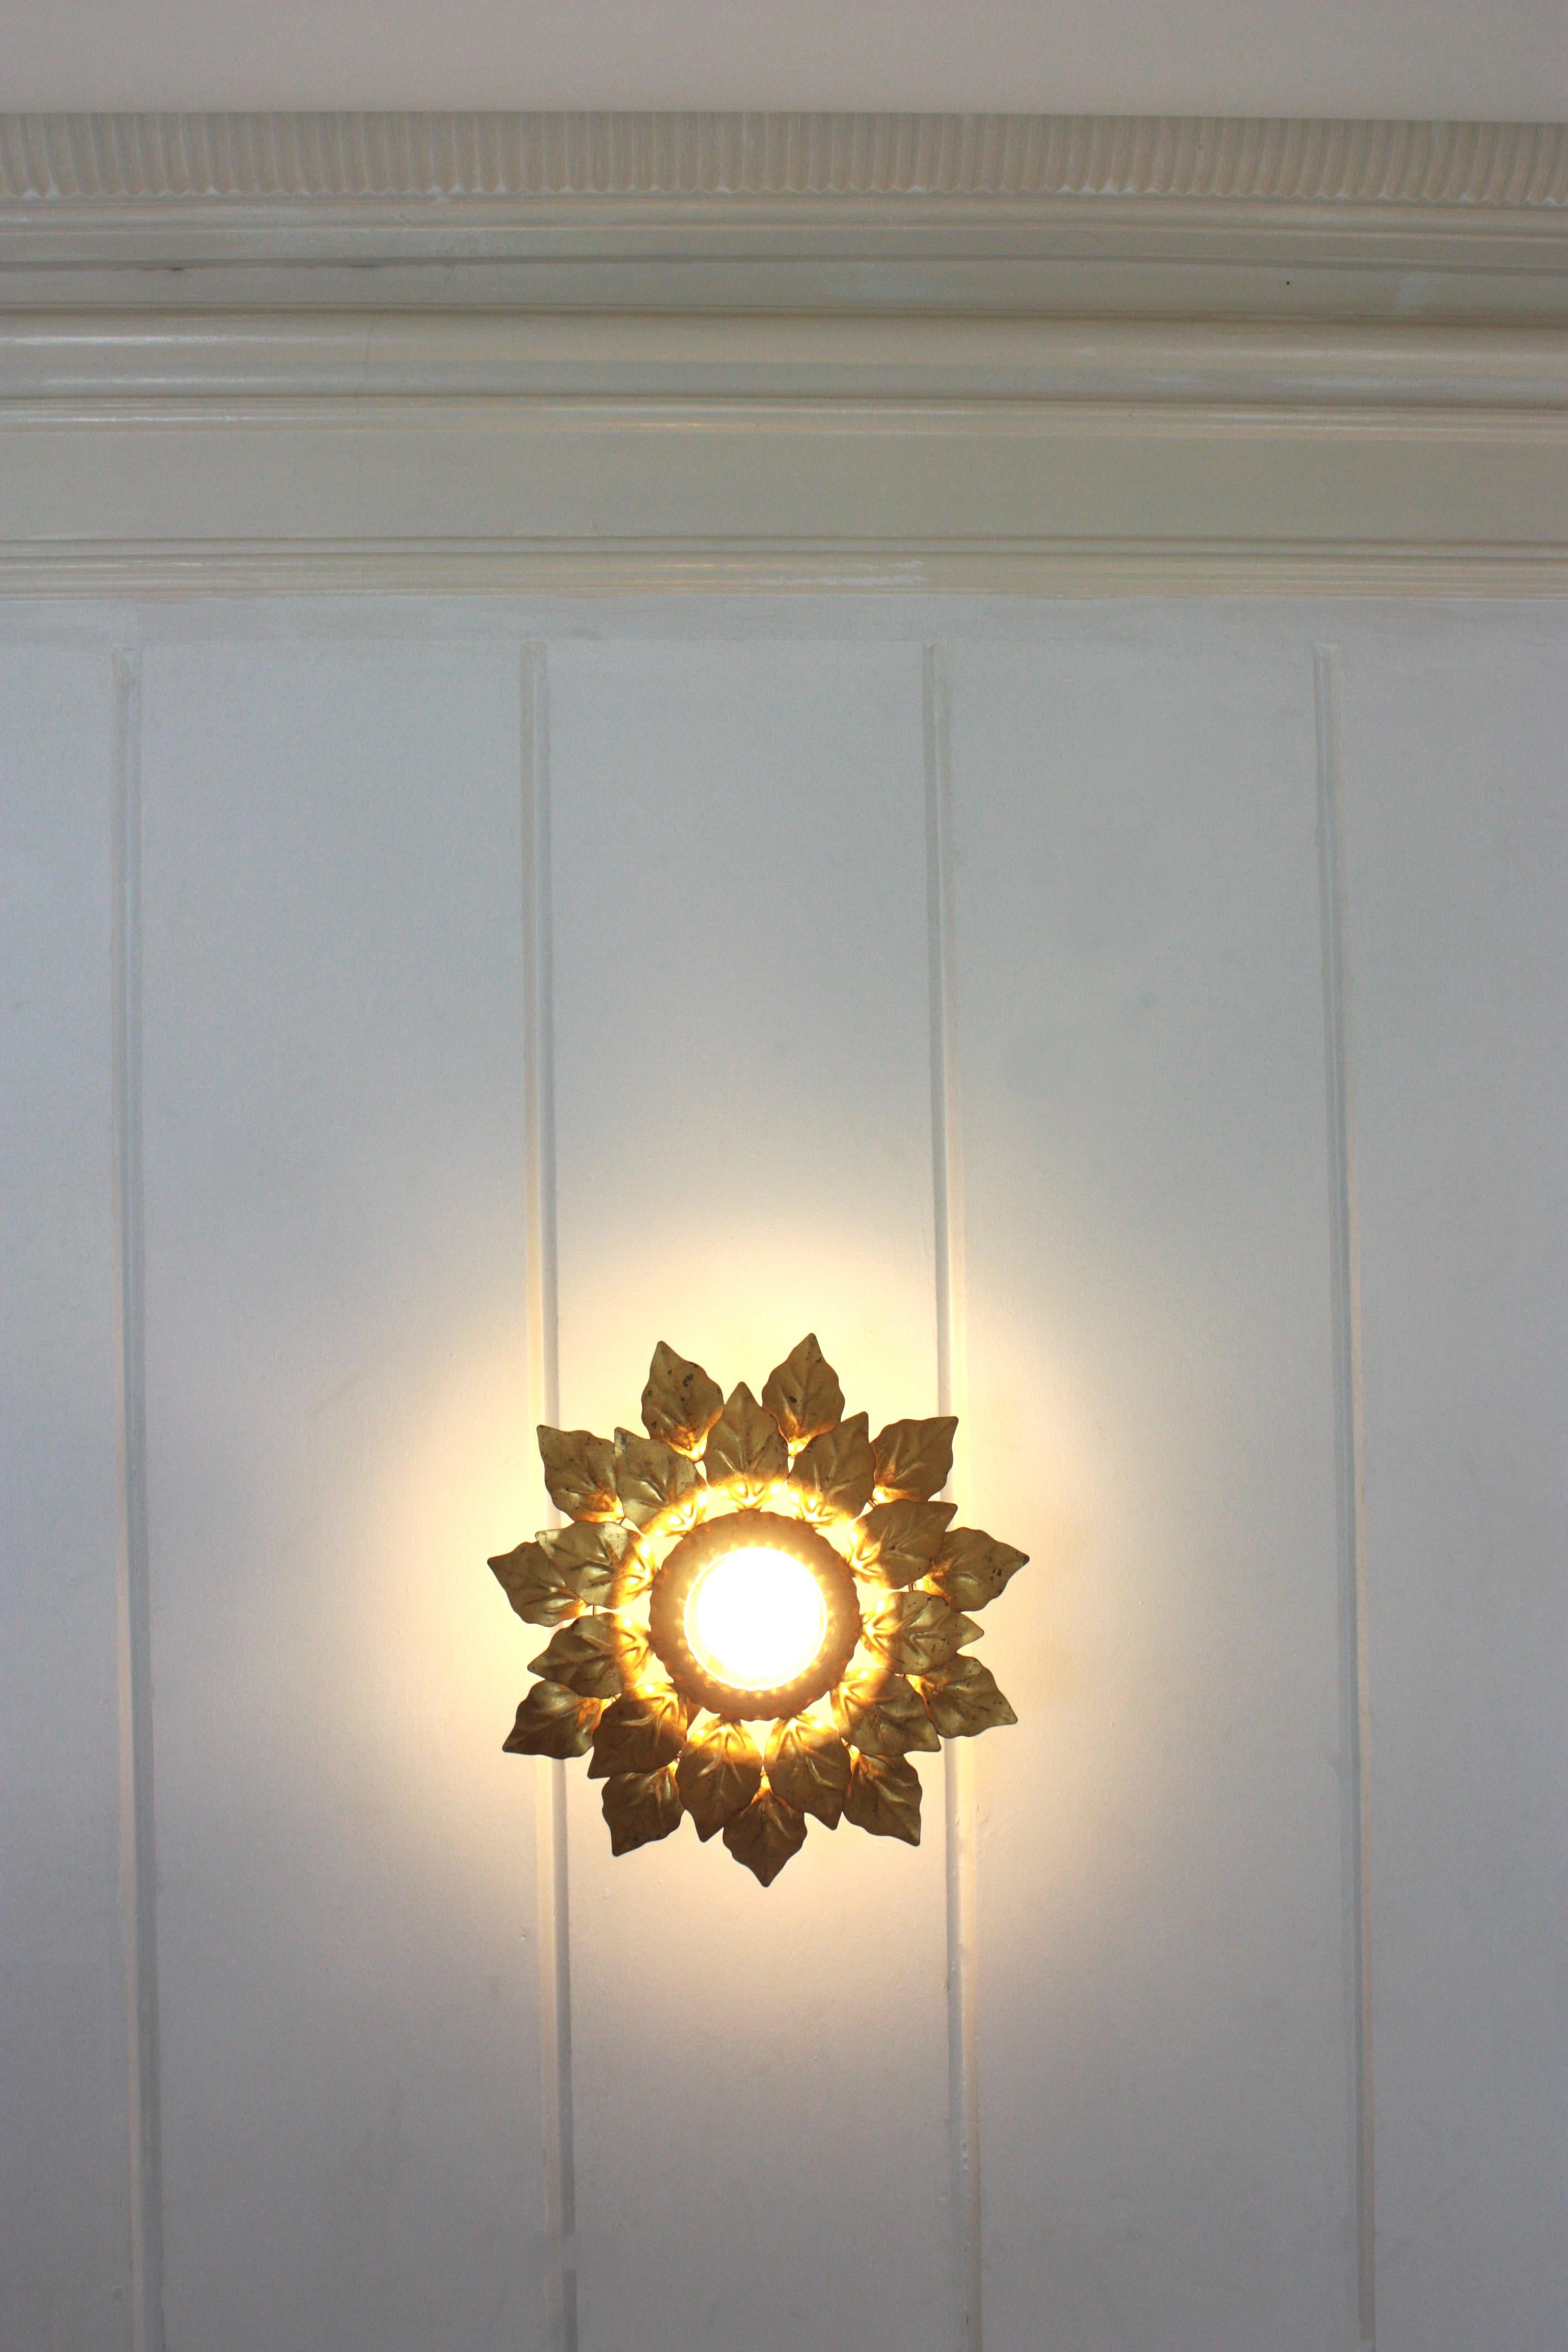 Spanish Sunburst Light Fixture with Double Leafed Frame, Gilt Iron For Sale 3